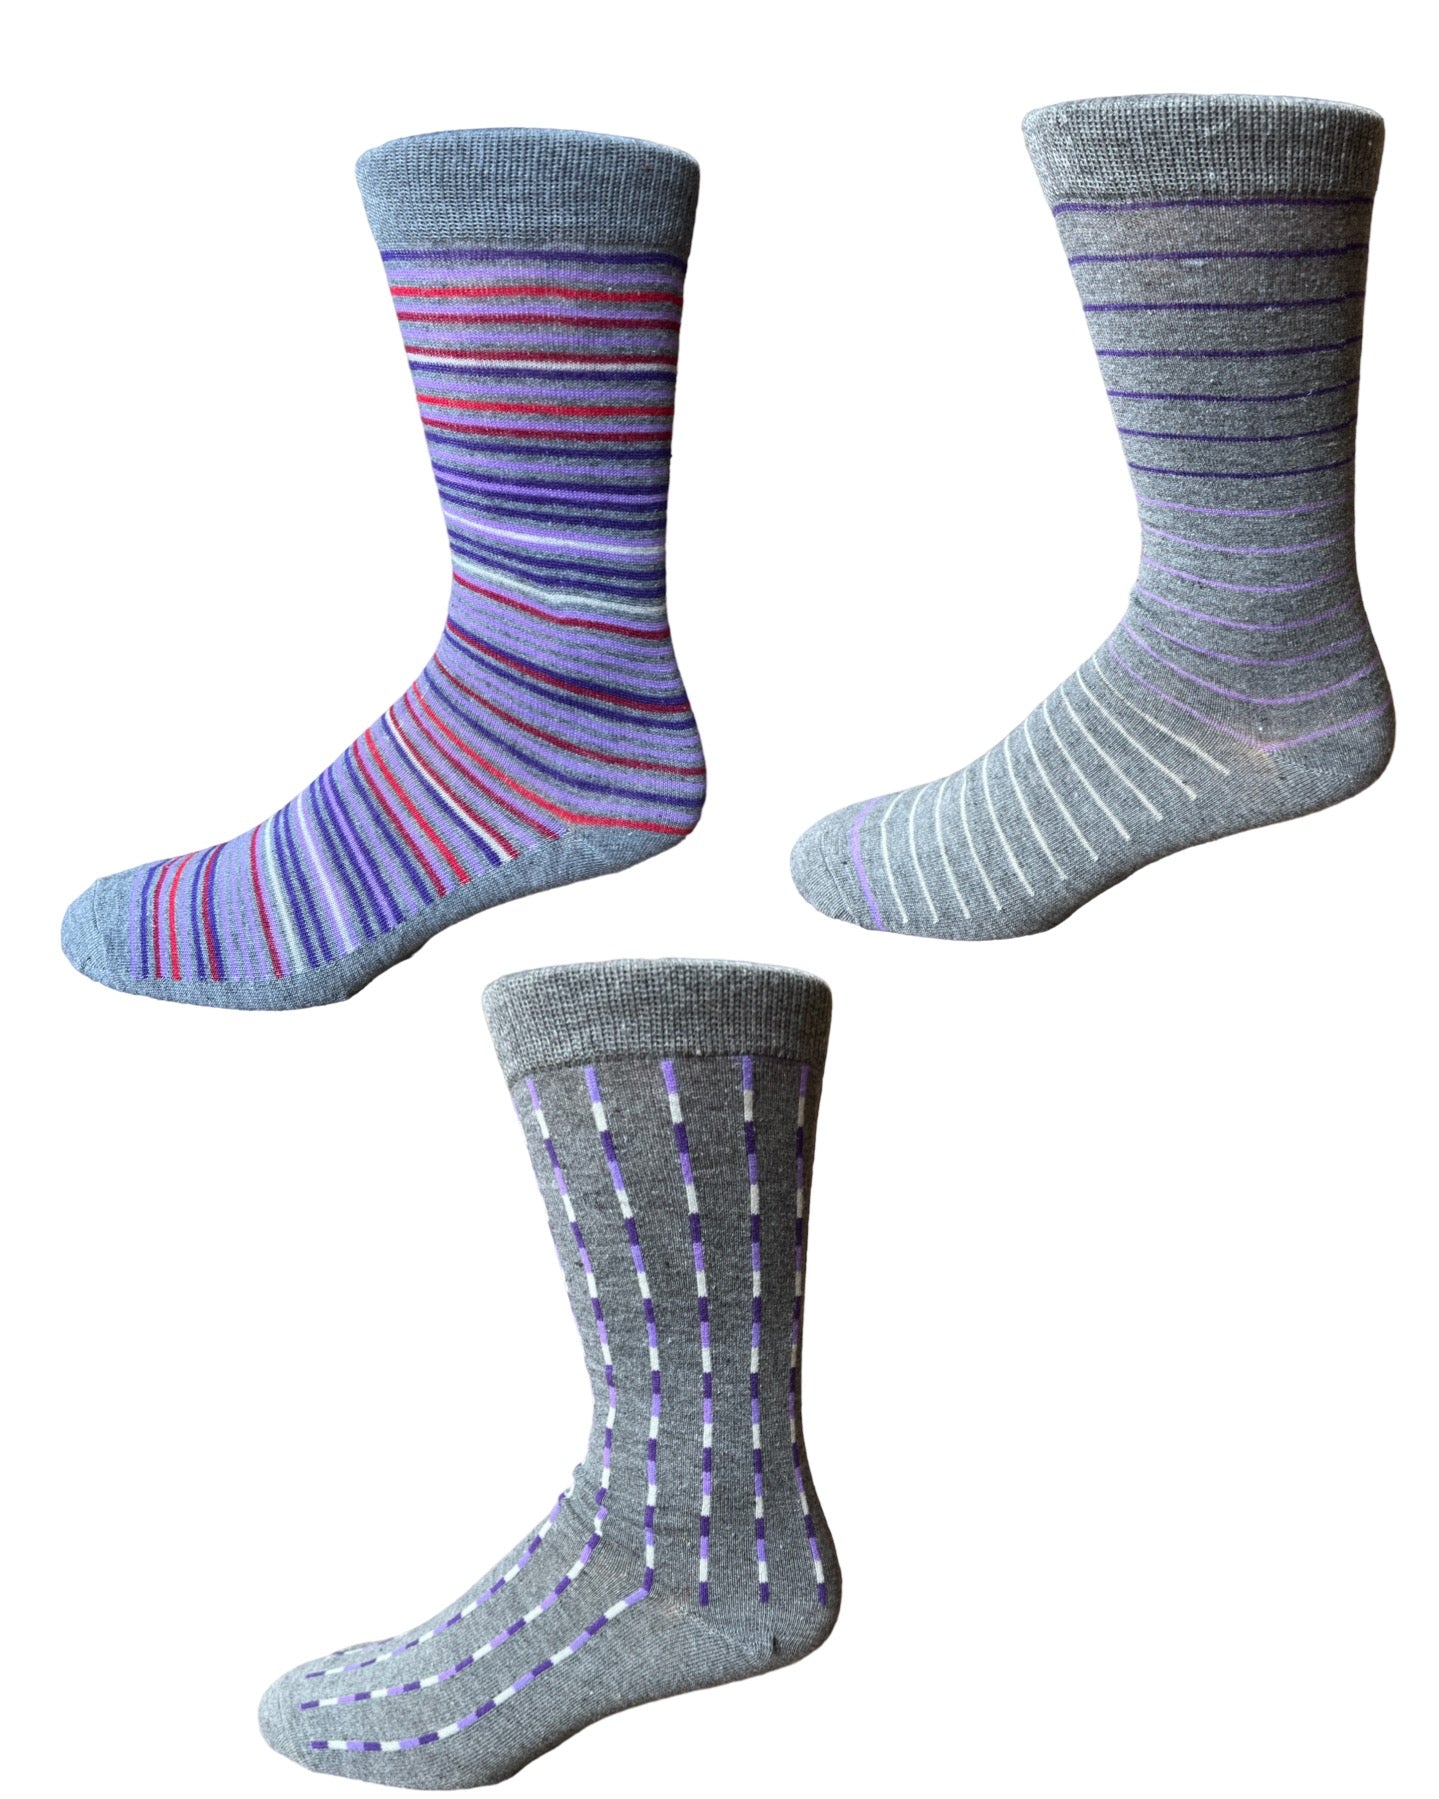 Stripes Assortment Fashion Socks in Grey 3pr Pack